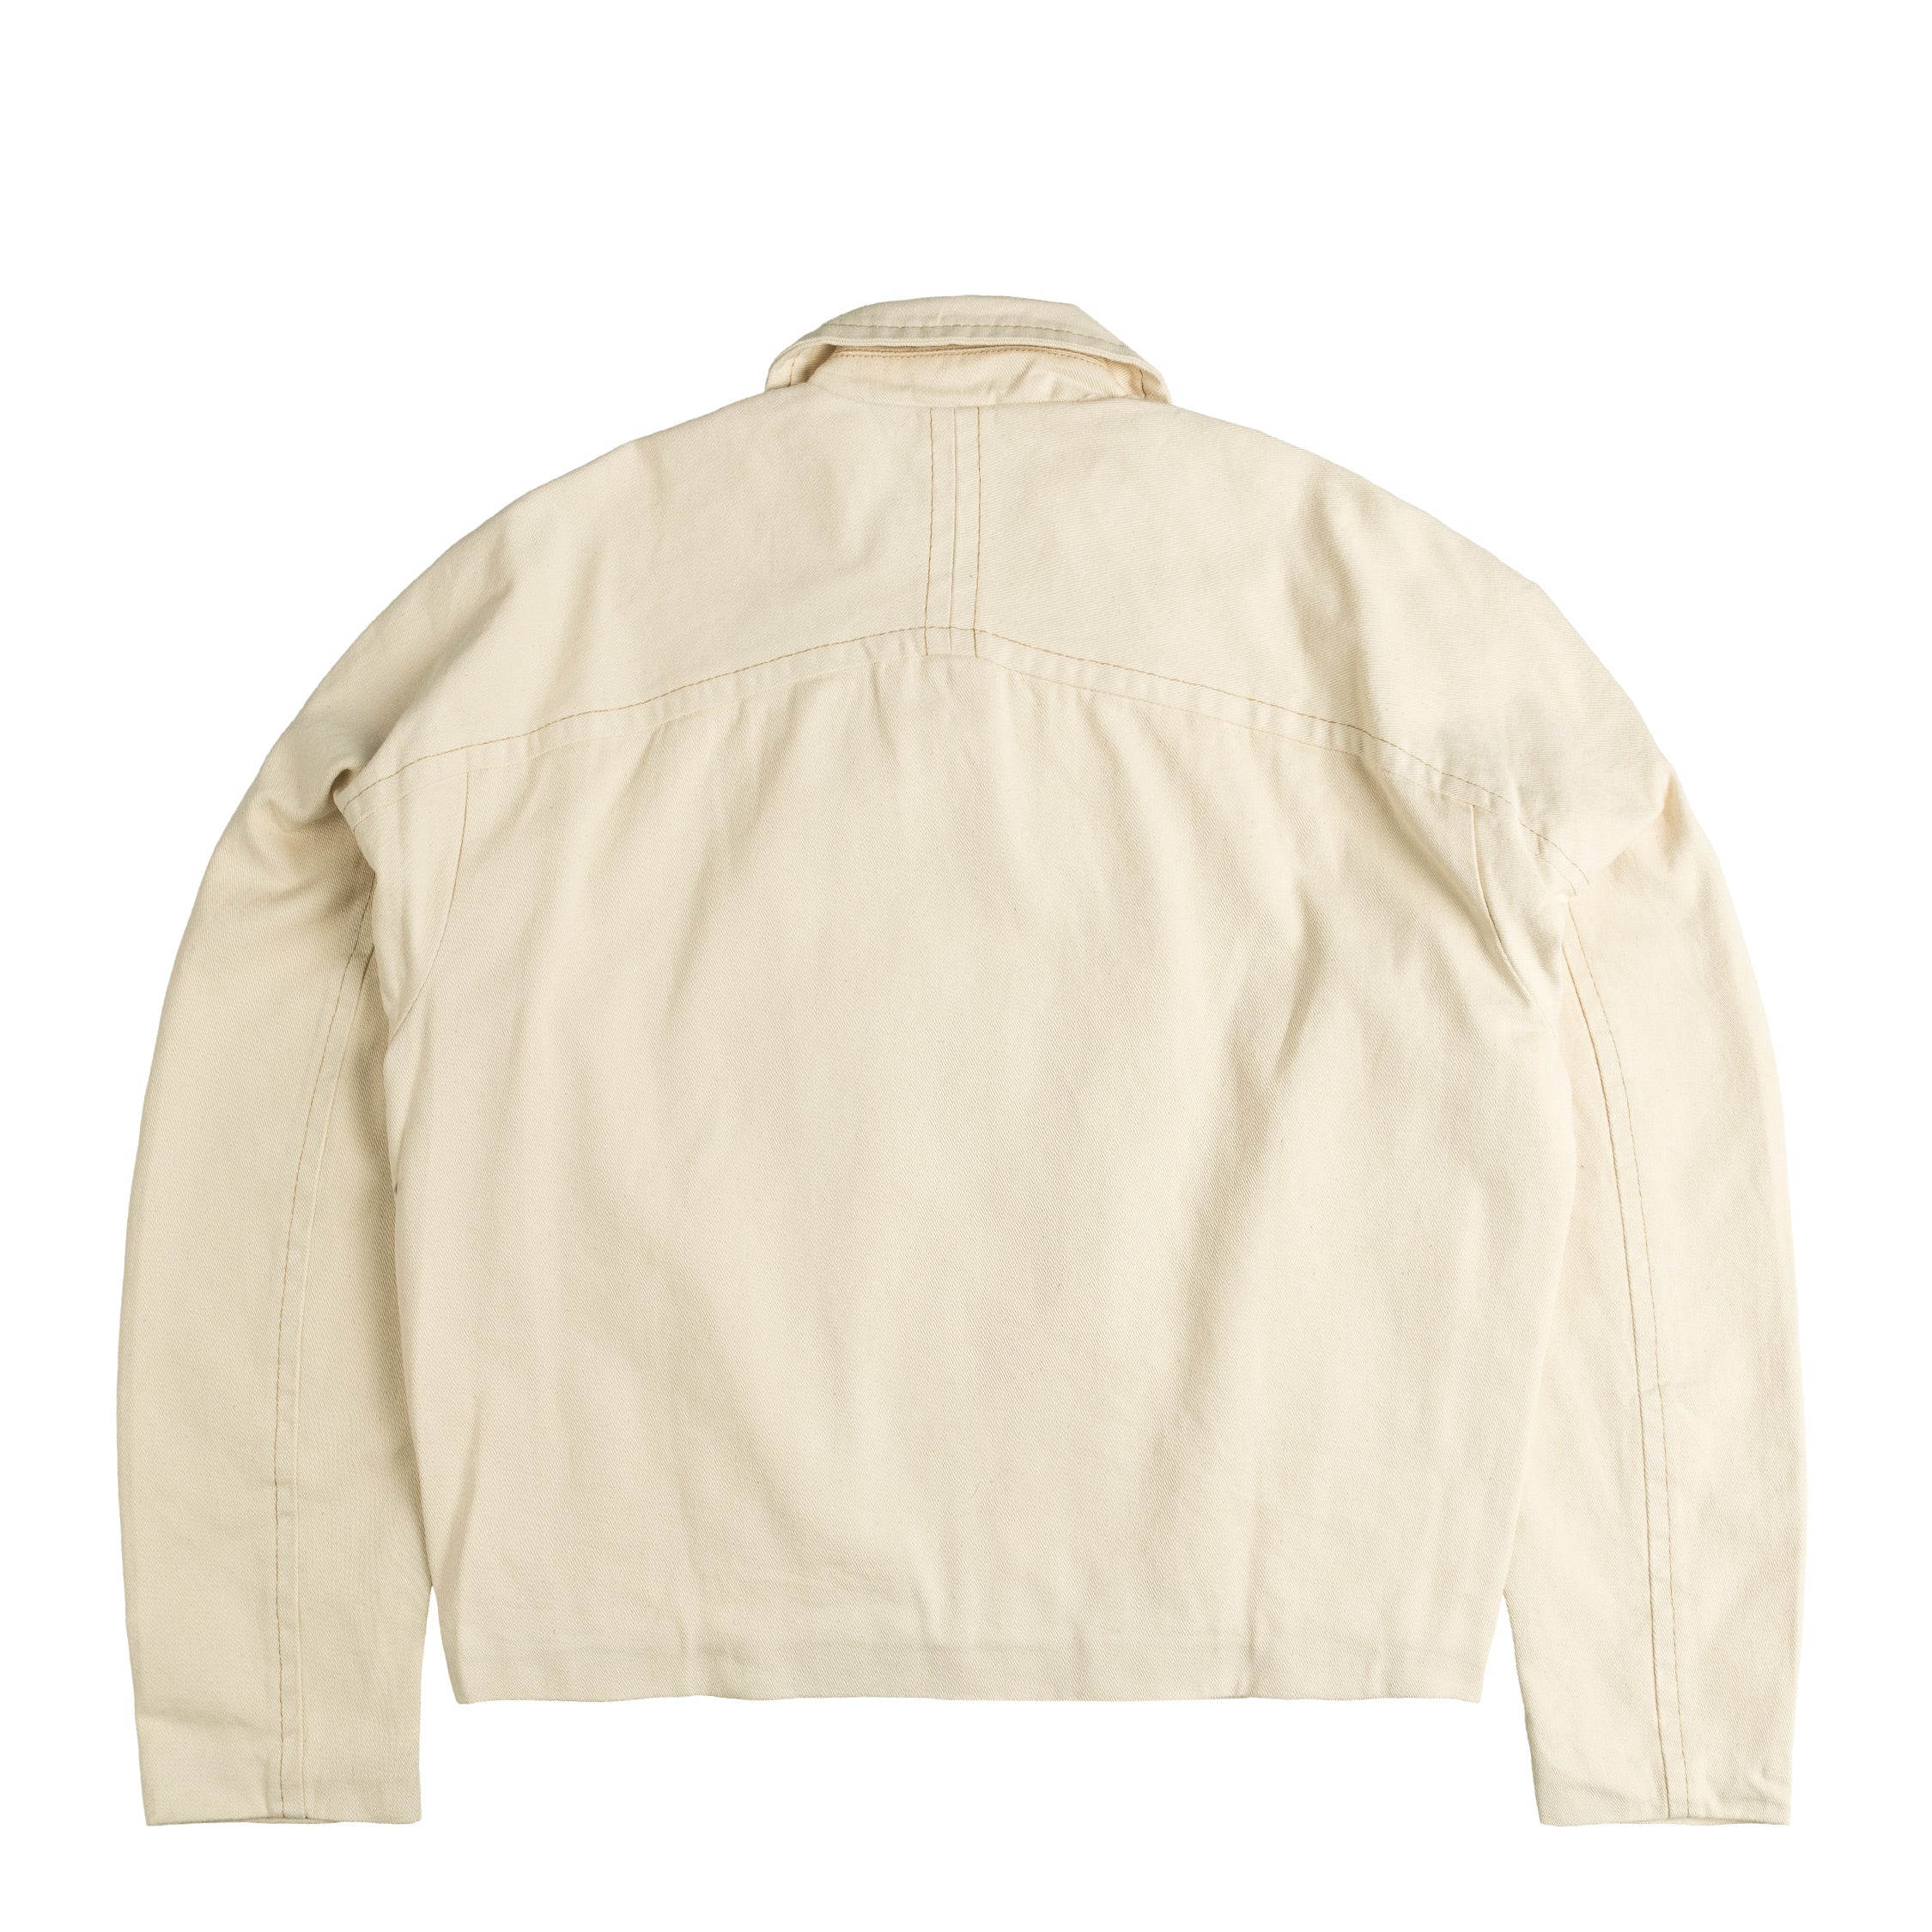 Perplex Workwear Jacket – buy now at Asphaltgold Online Store!